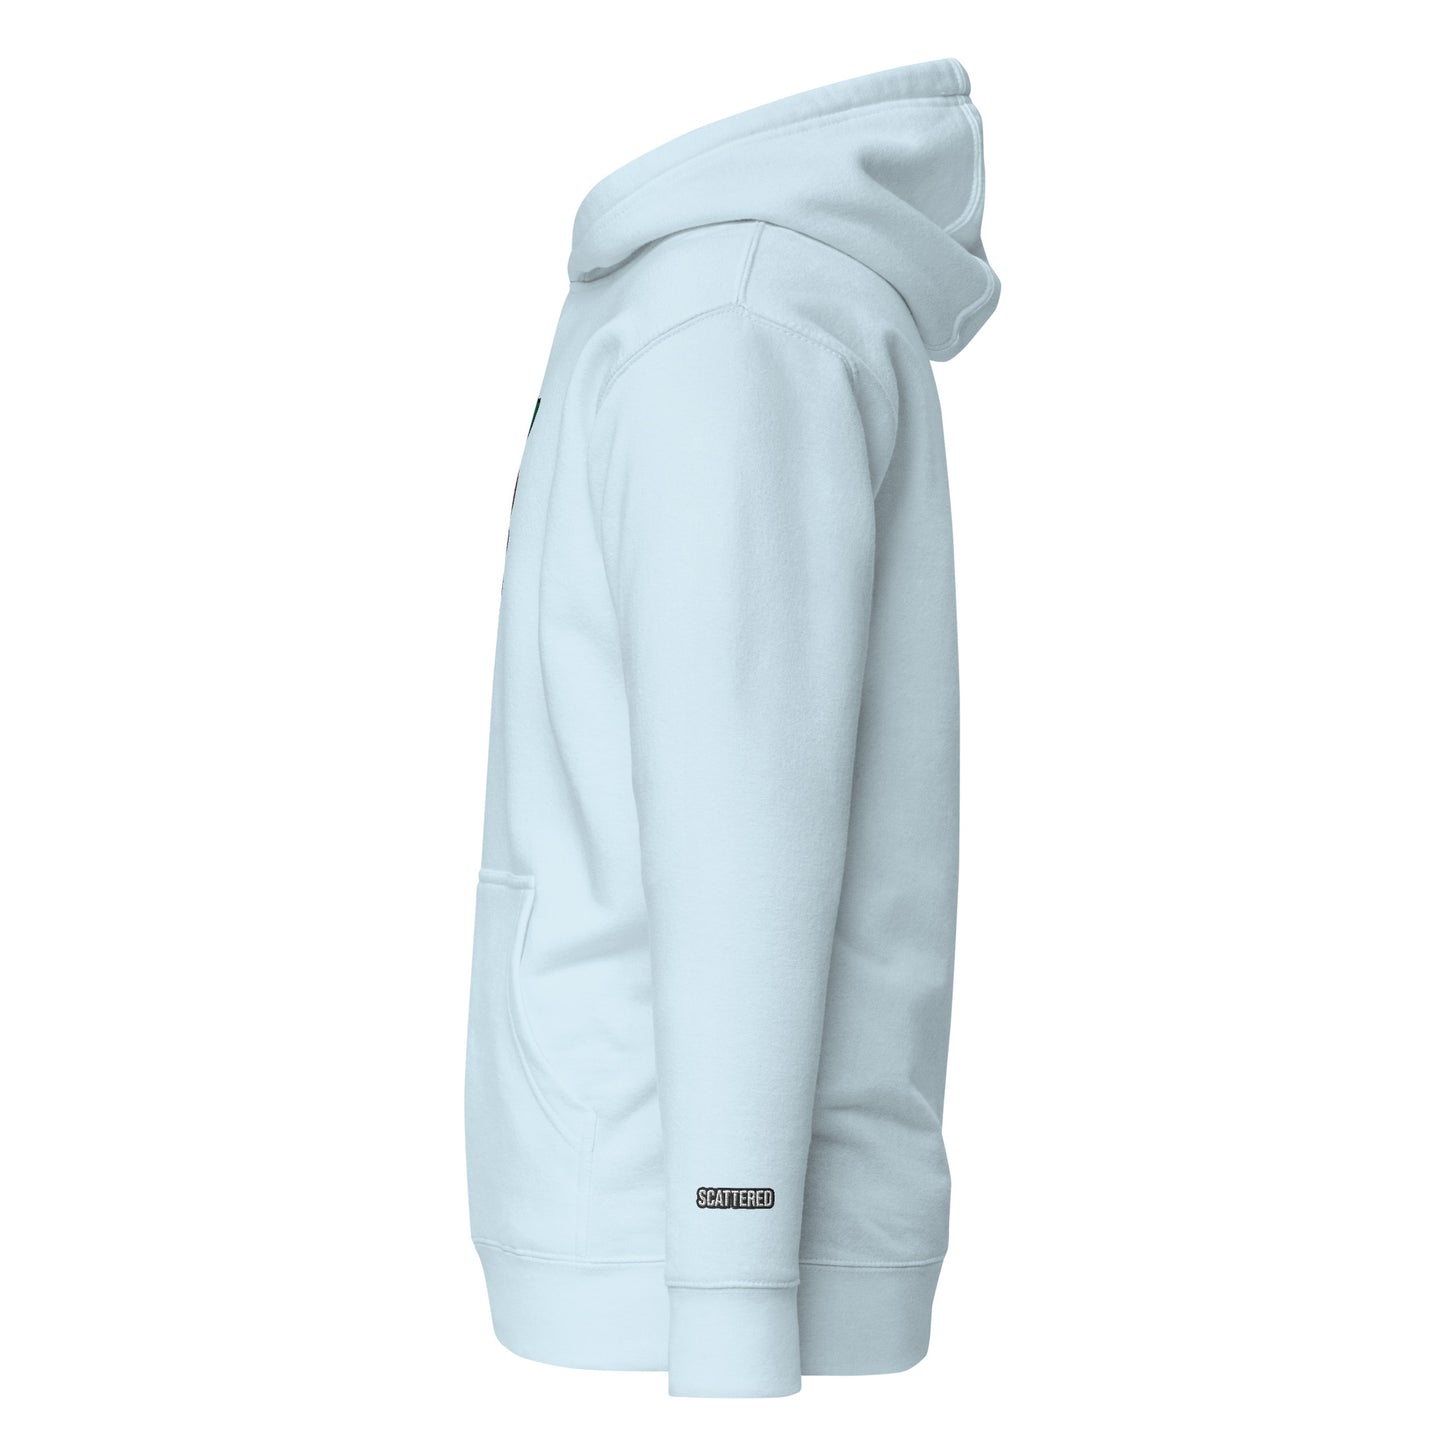 New York Apple Logo Embroidered Ice Blue Streetwear Hoodie Sweatshirt | Scattered